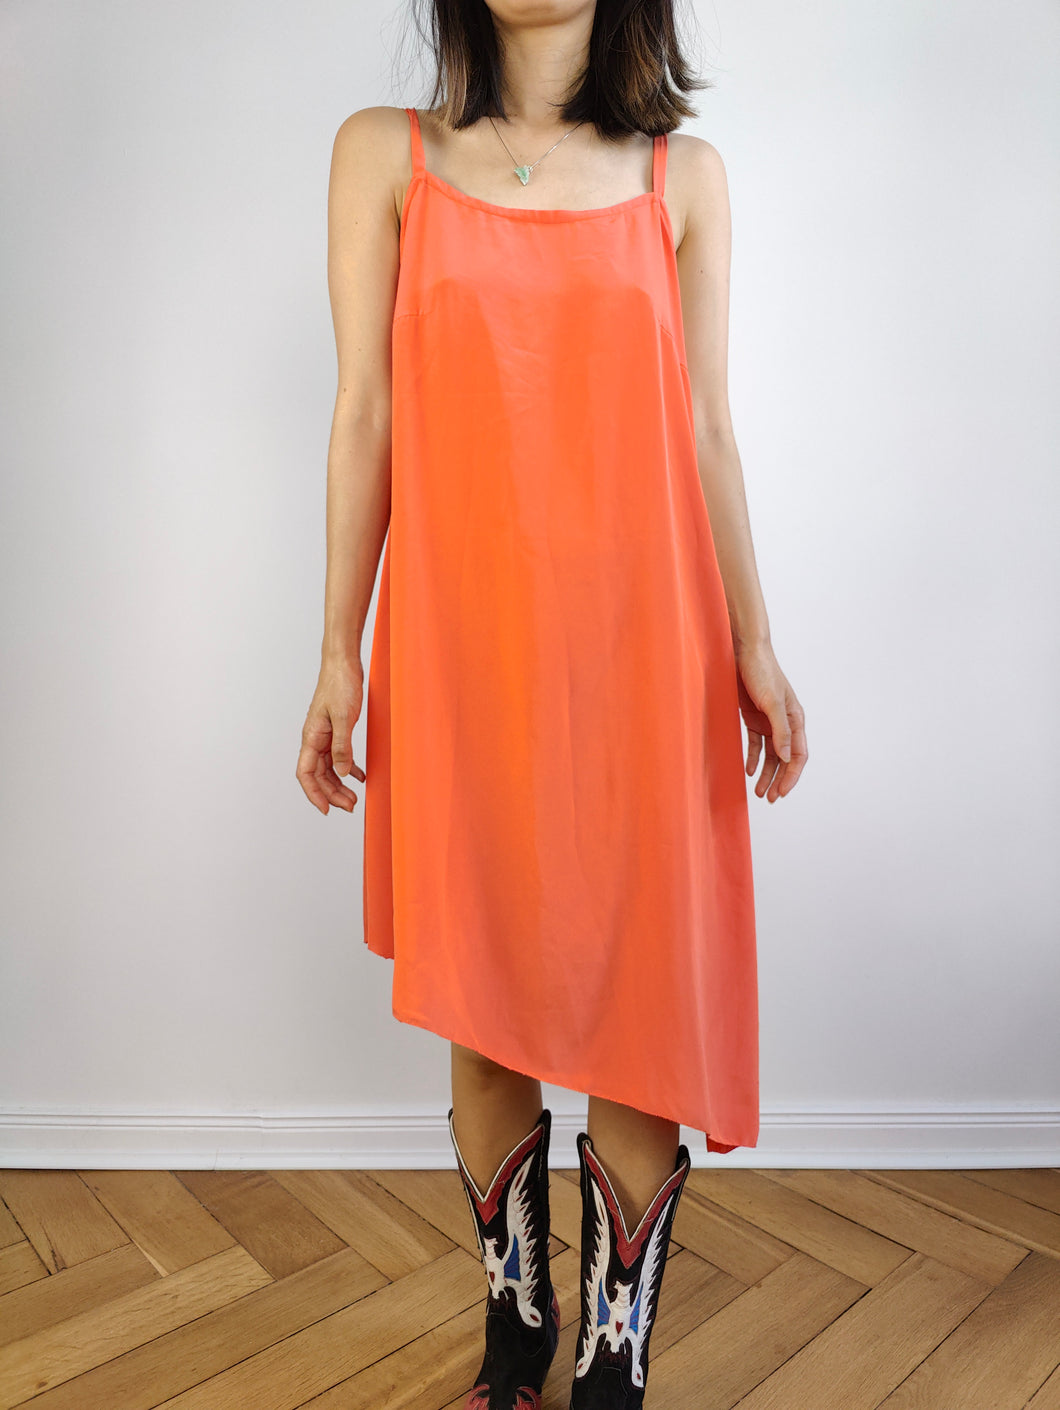 The Orange Slip Dress Asymmetric | Vintage midi long lingerie strap dress S-M